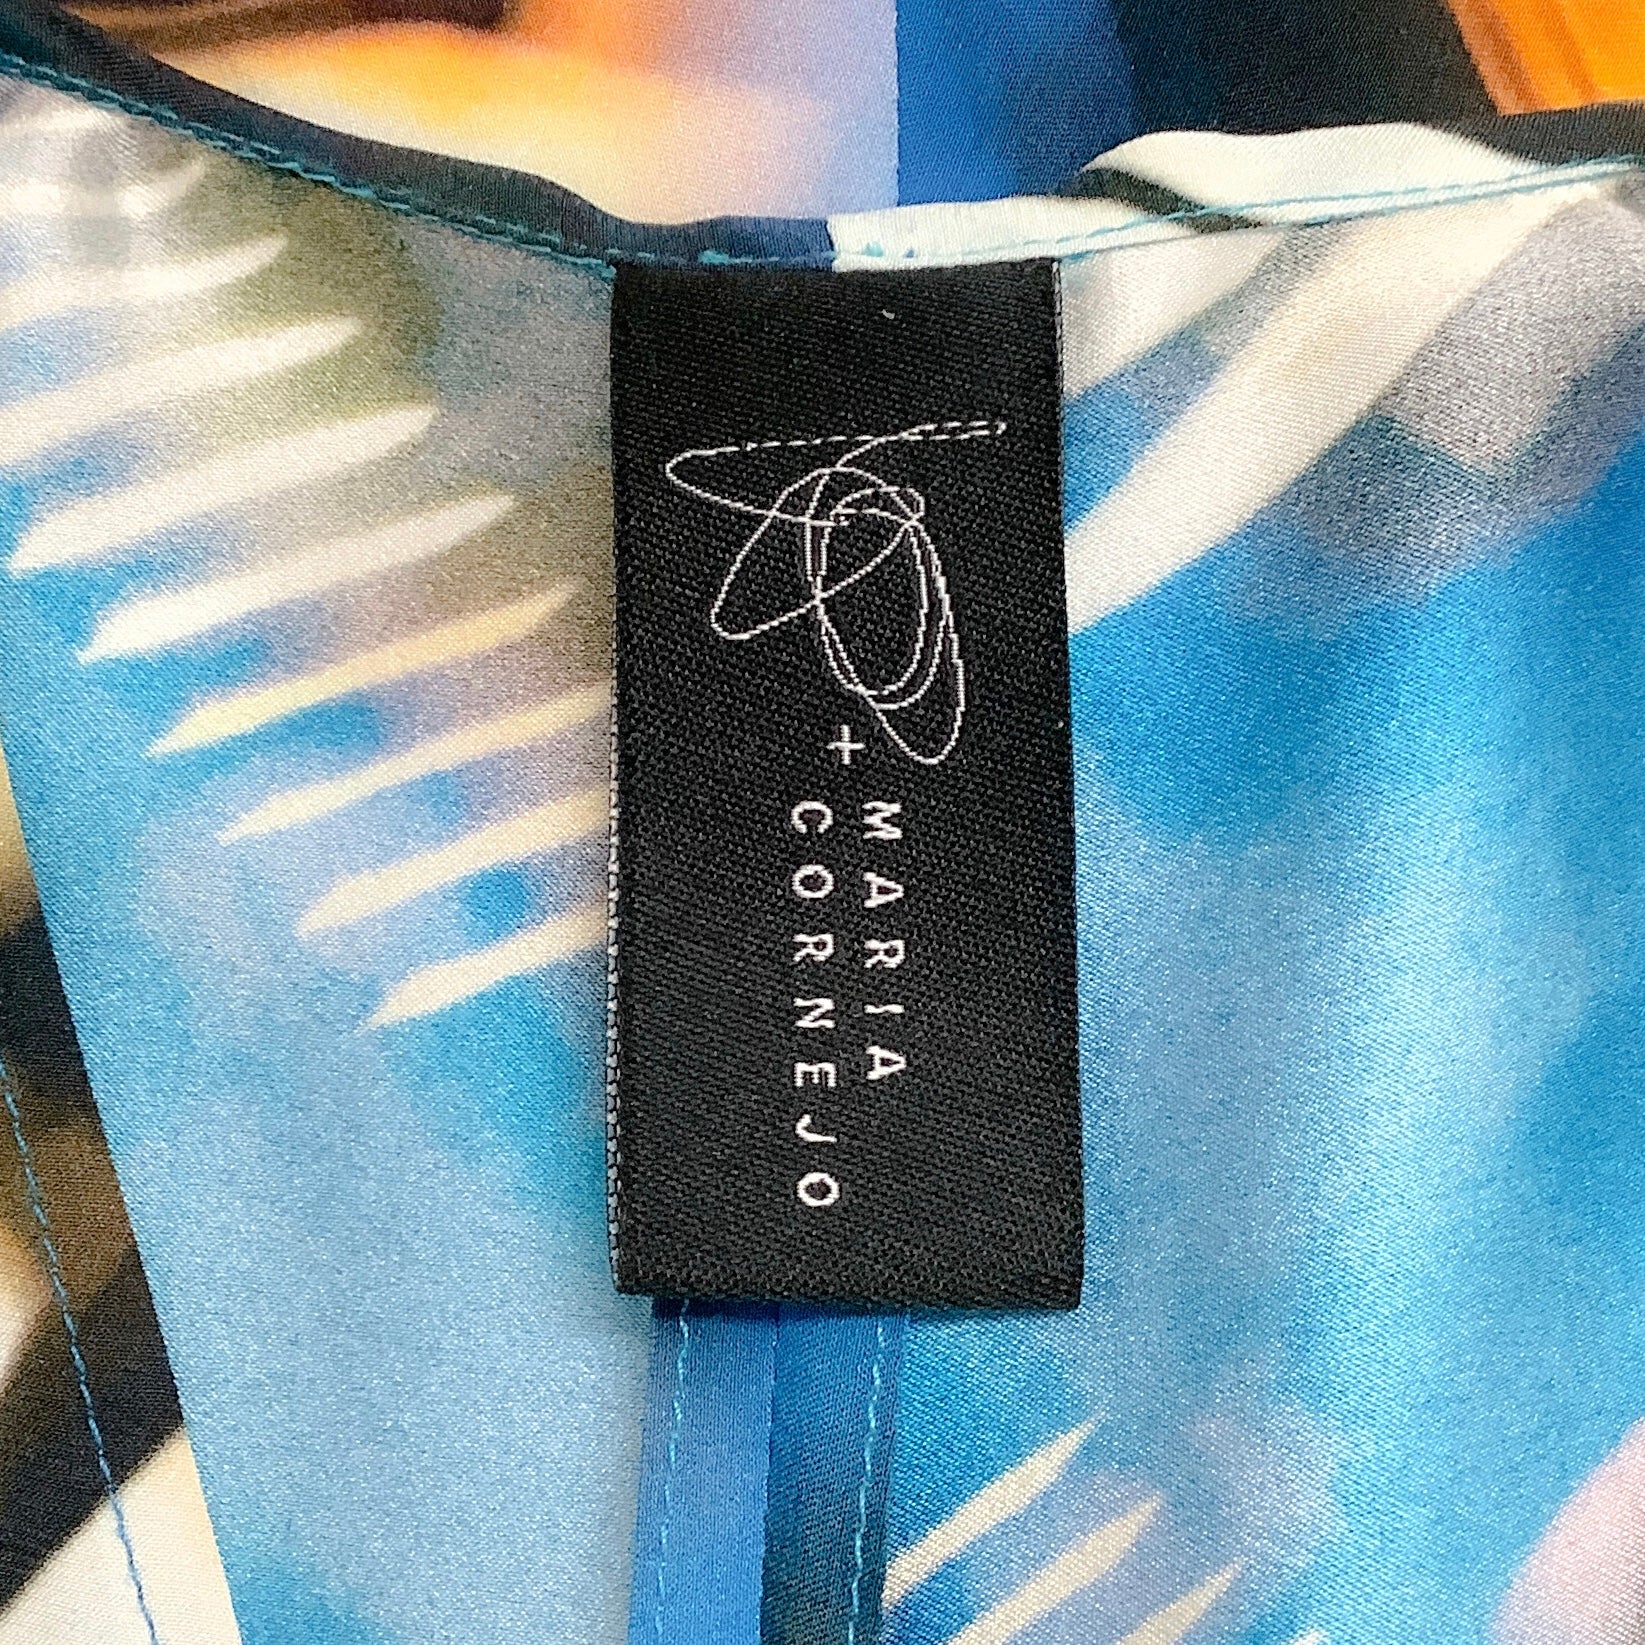 Zero+Maria Cornejo Cobalt Multi Print Draped Sleeveless Dress